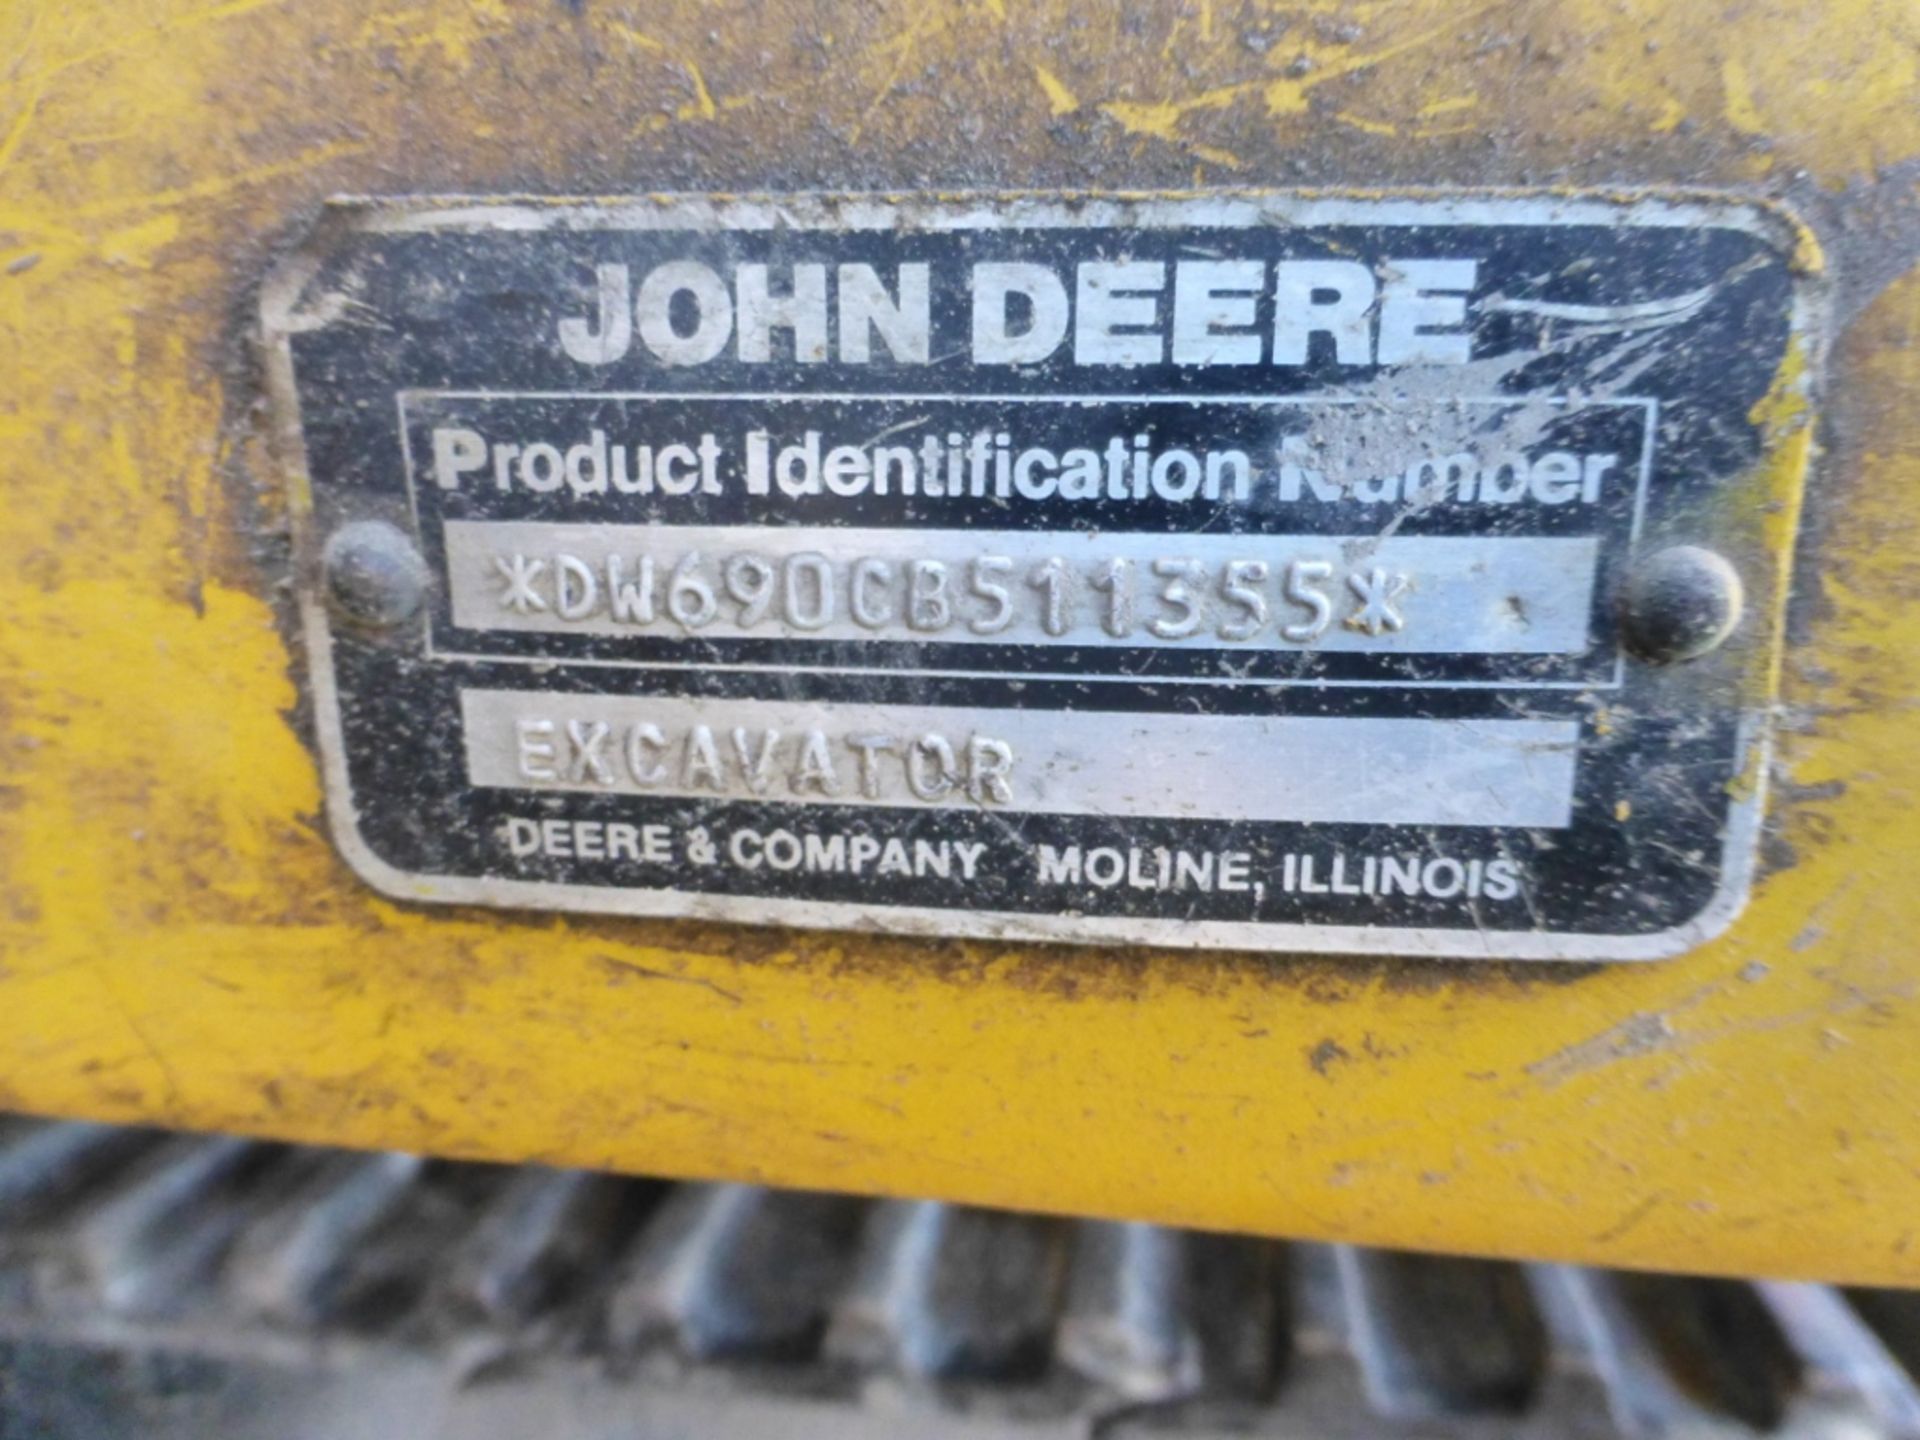 John Deere 690 C excavator, with scoop bucket, unknown hrs, pin: dw690cb511355 - Image 17 of 33